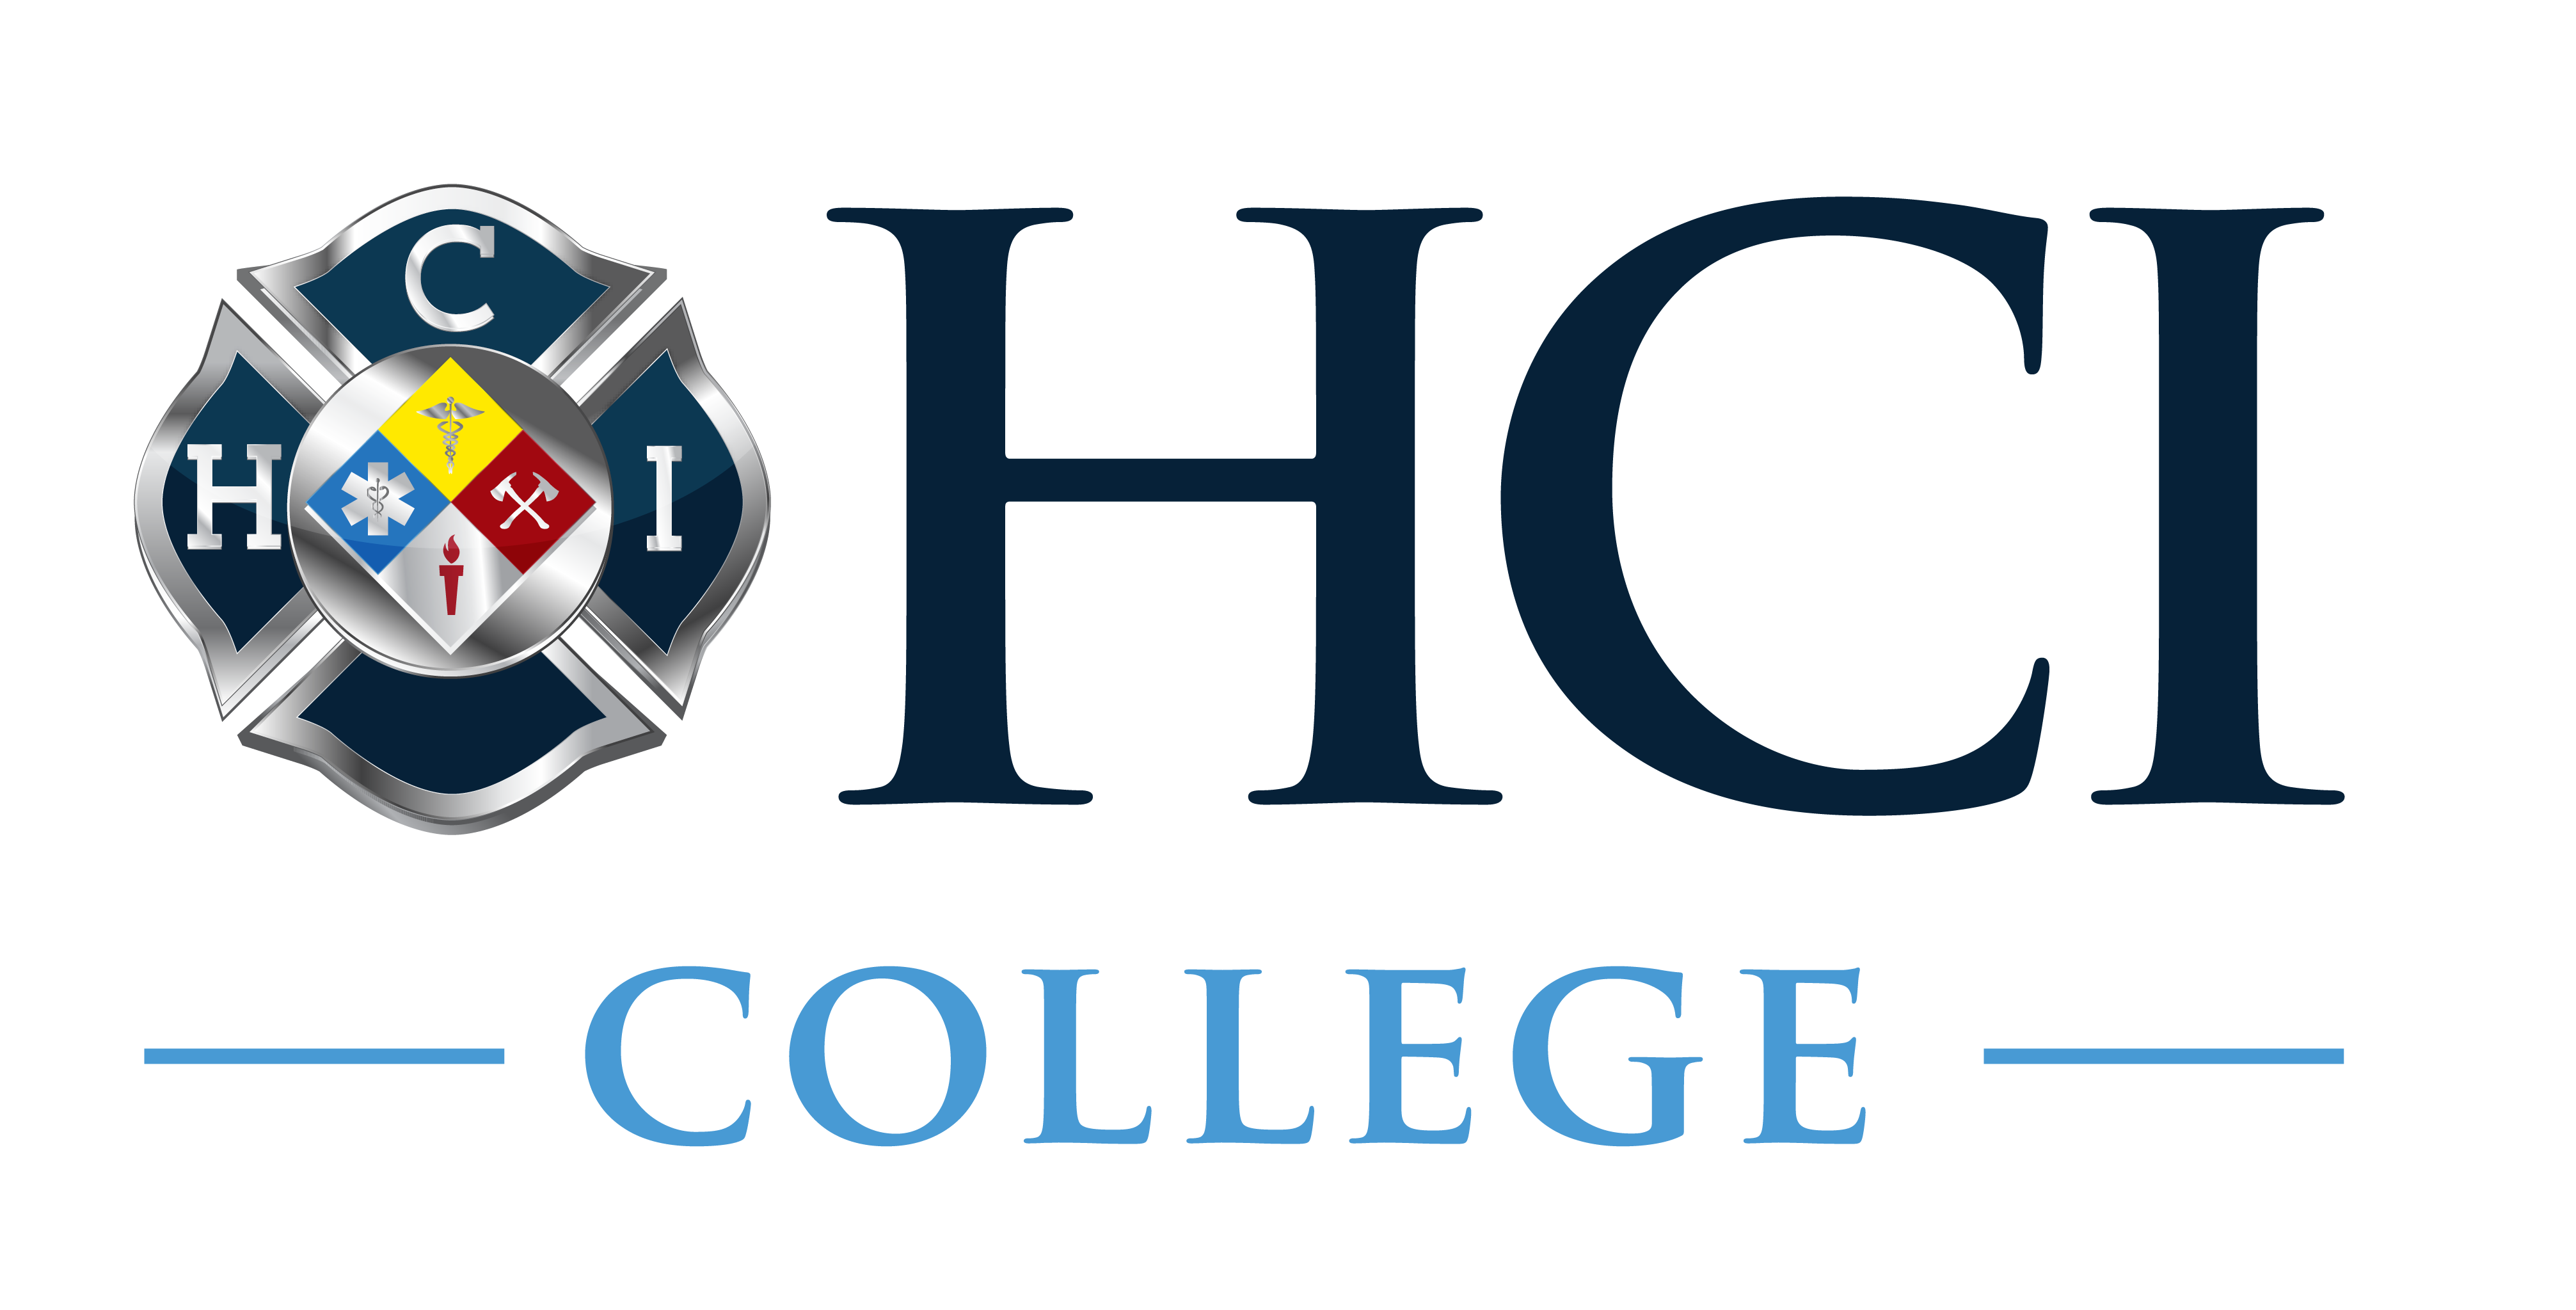 Hci hg. HCI. HCI картинка. Gifu College logo. Celt Colleges logo.